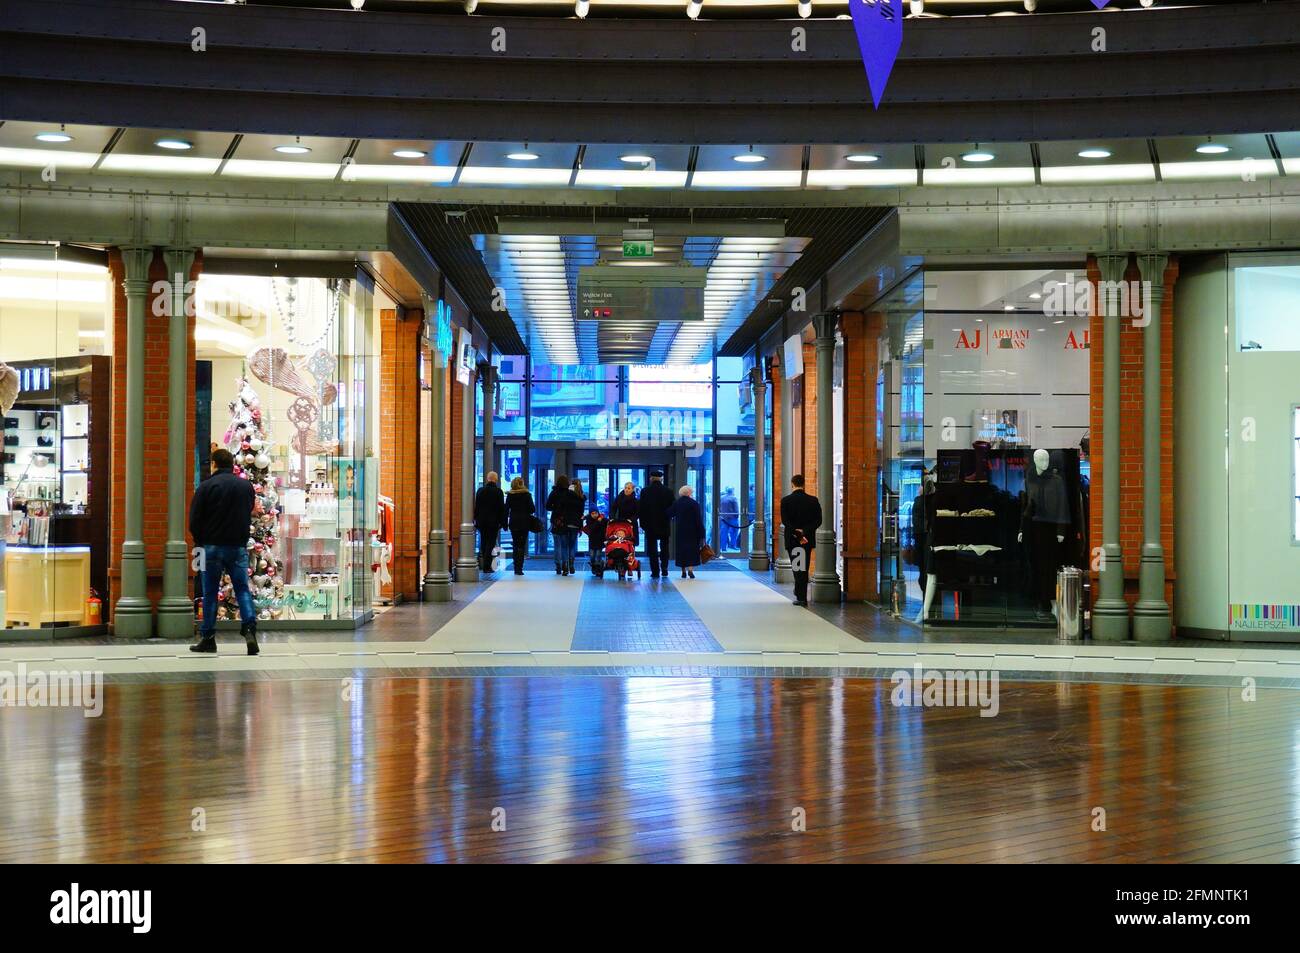 POZNAN, POLAND - Dec 01, 2013: Interior of the Stary Browar shopping mall. Stock Photo